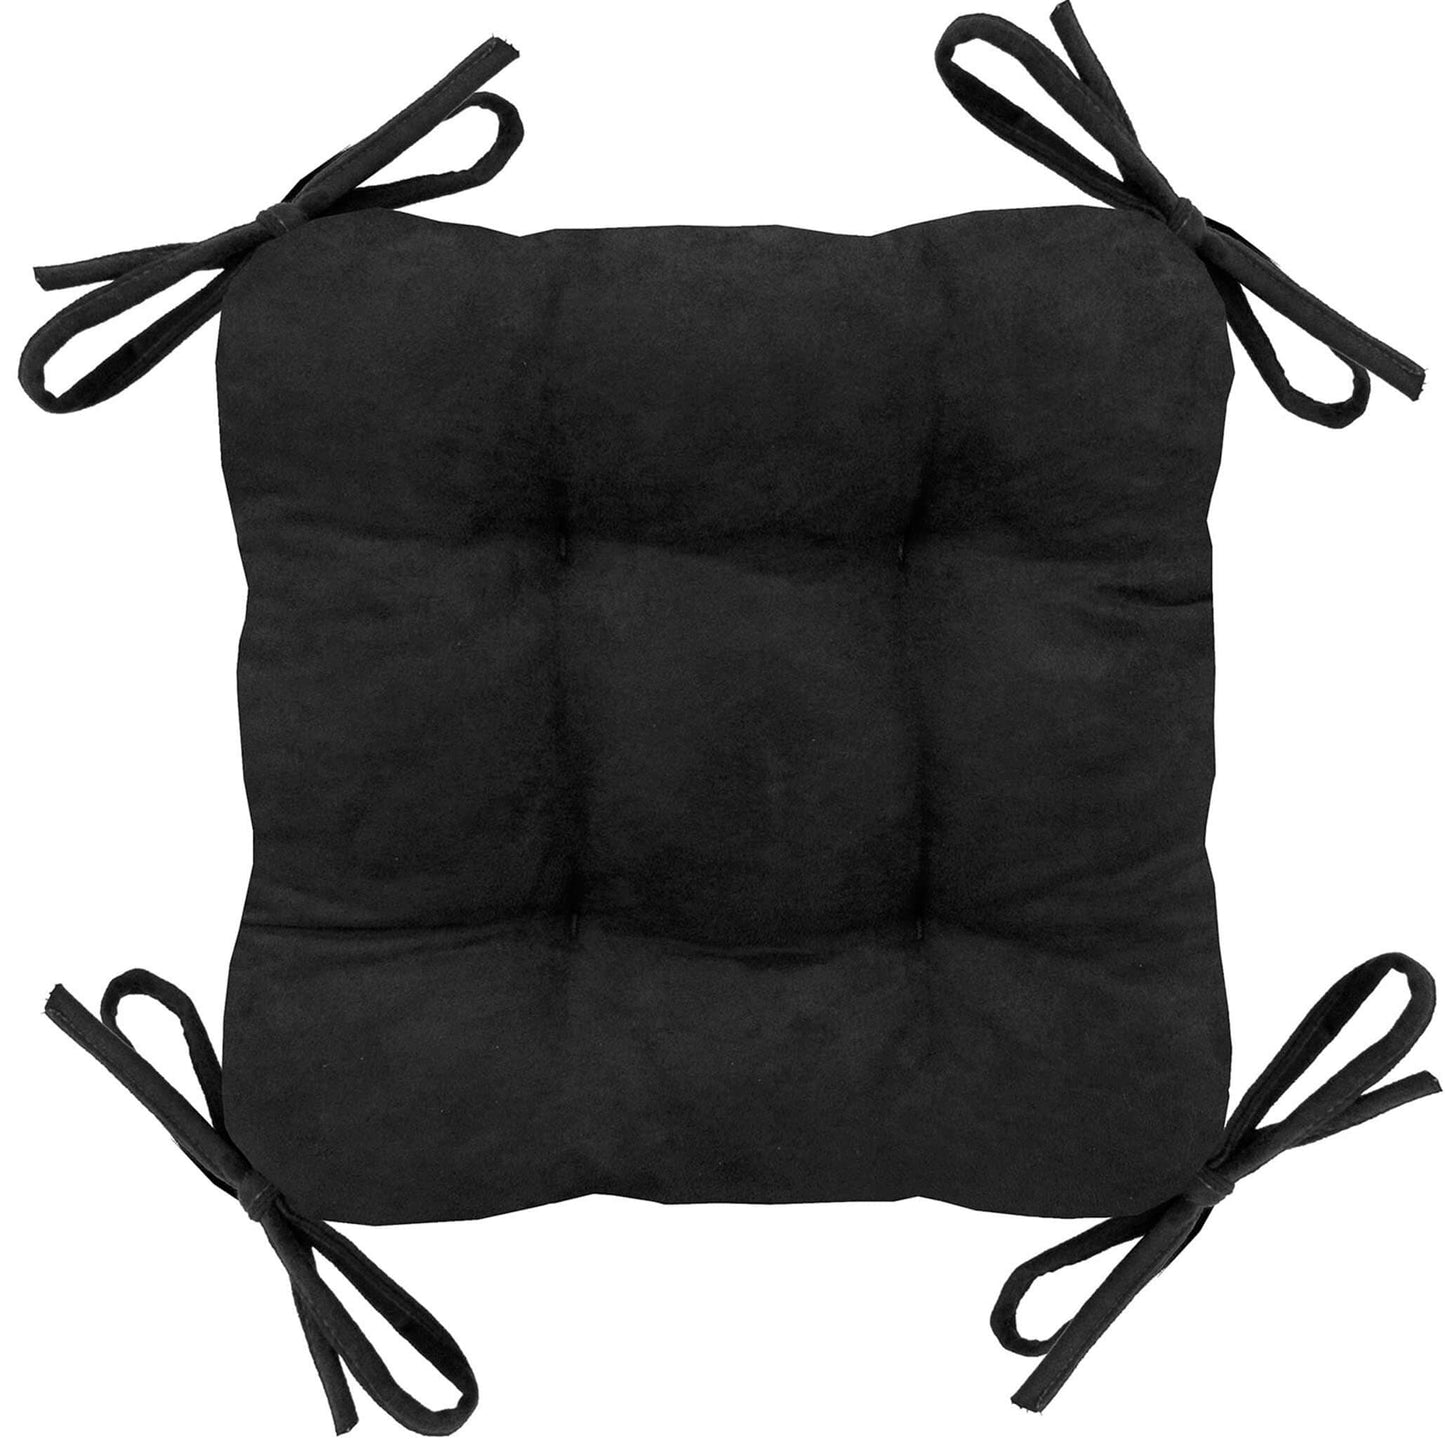 Micro-suede Black Square Industrial Bar Stool Cushion - Latex Foam Fill - Barnett Home Decor 